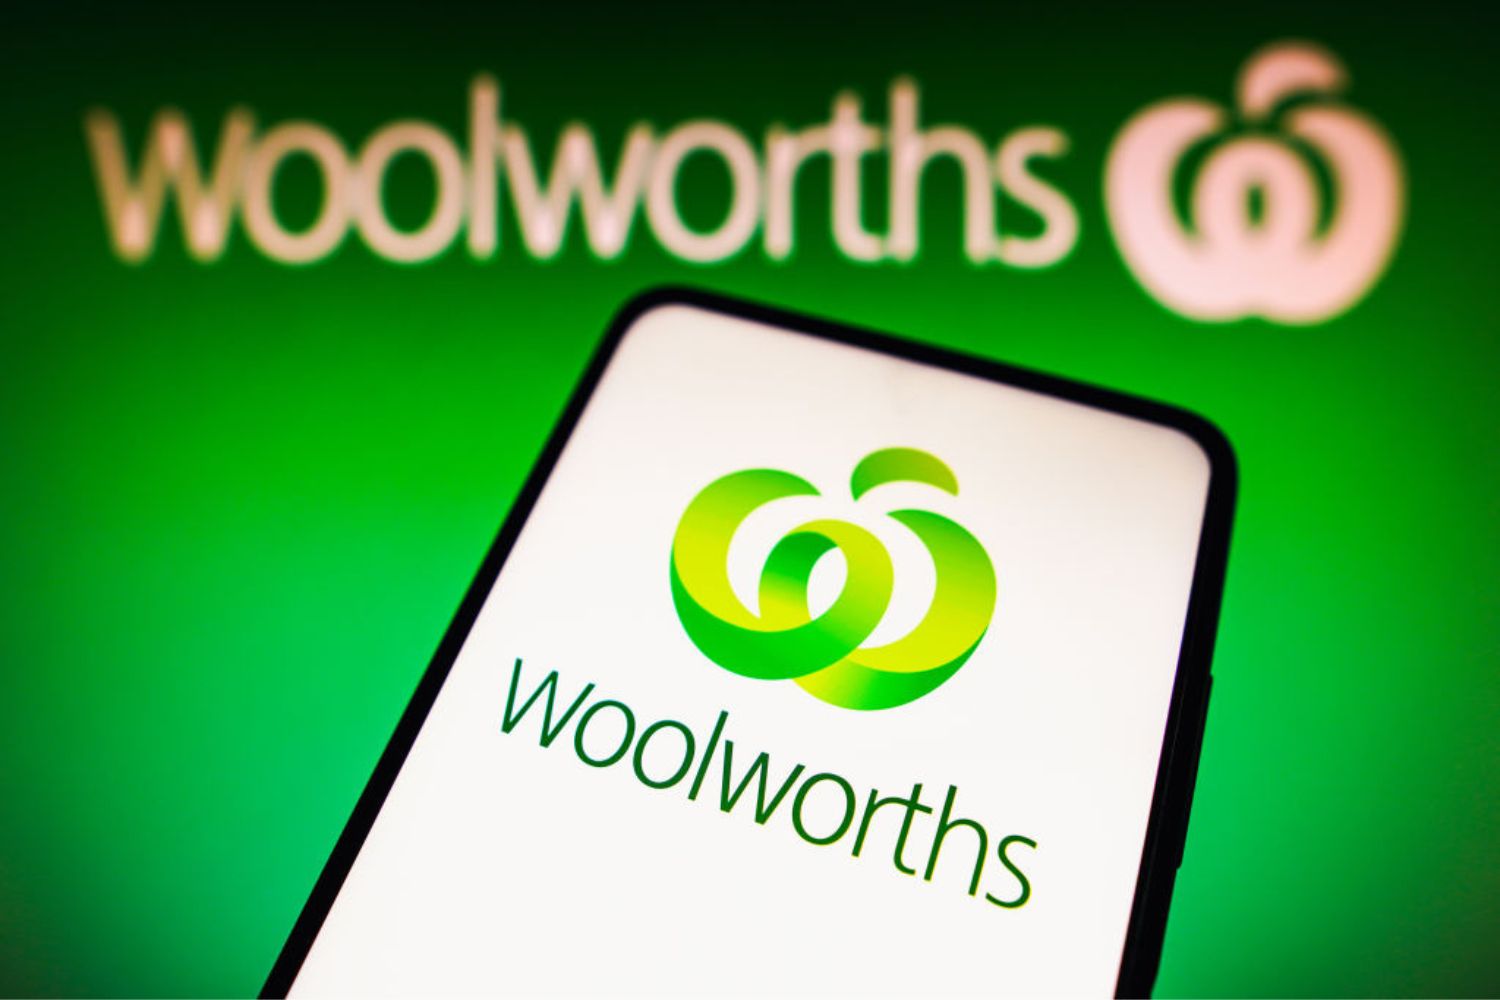 woolworths-app-on-phone